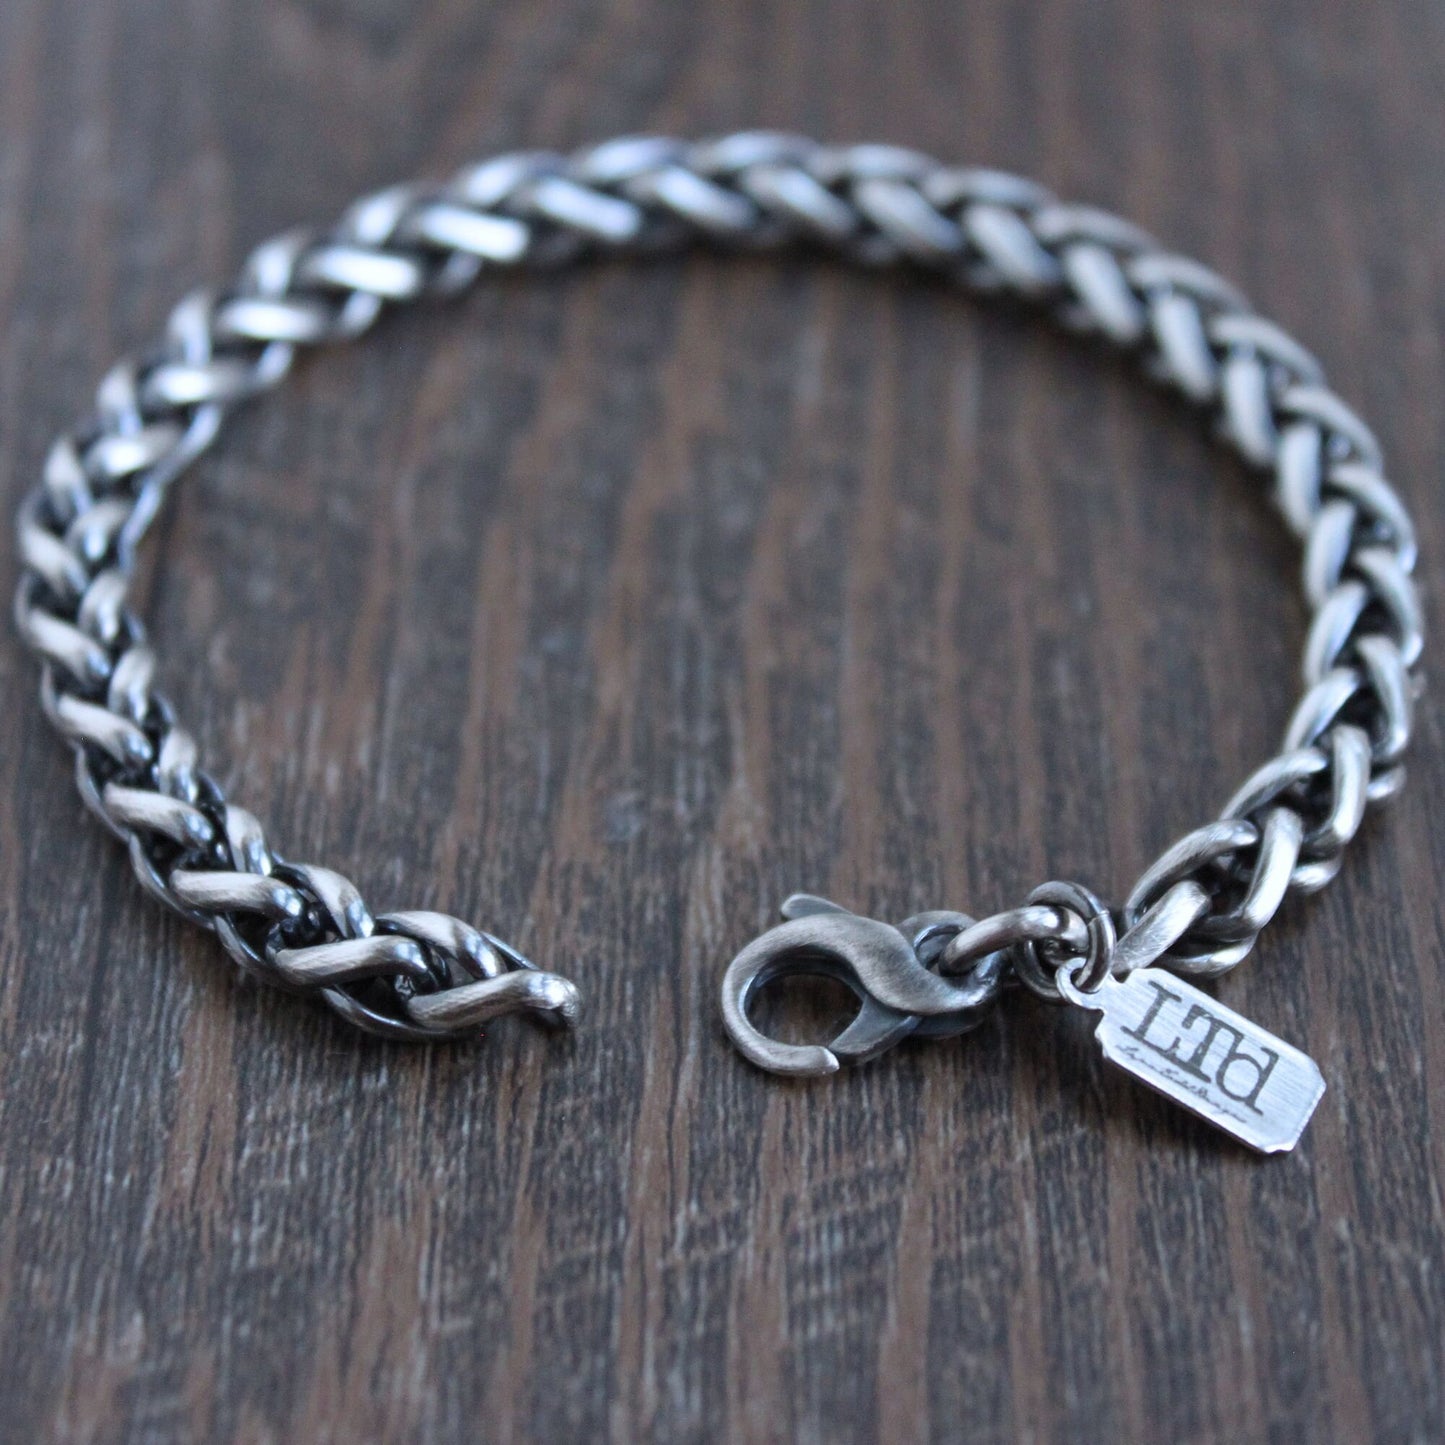 6mm oxidized silver wheat chain bracelet